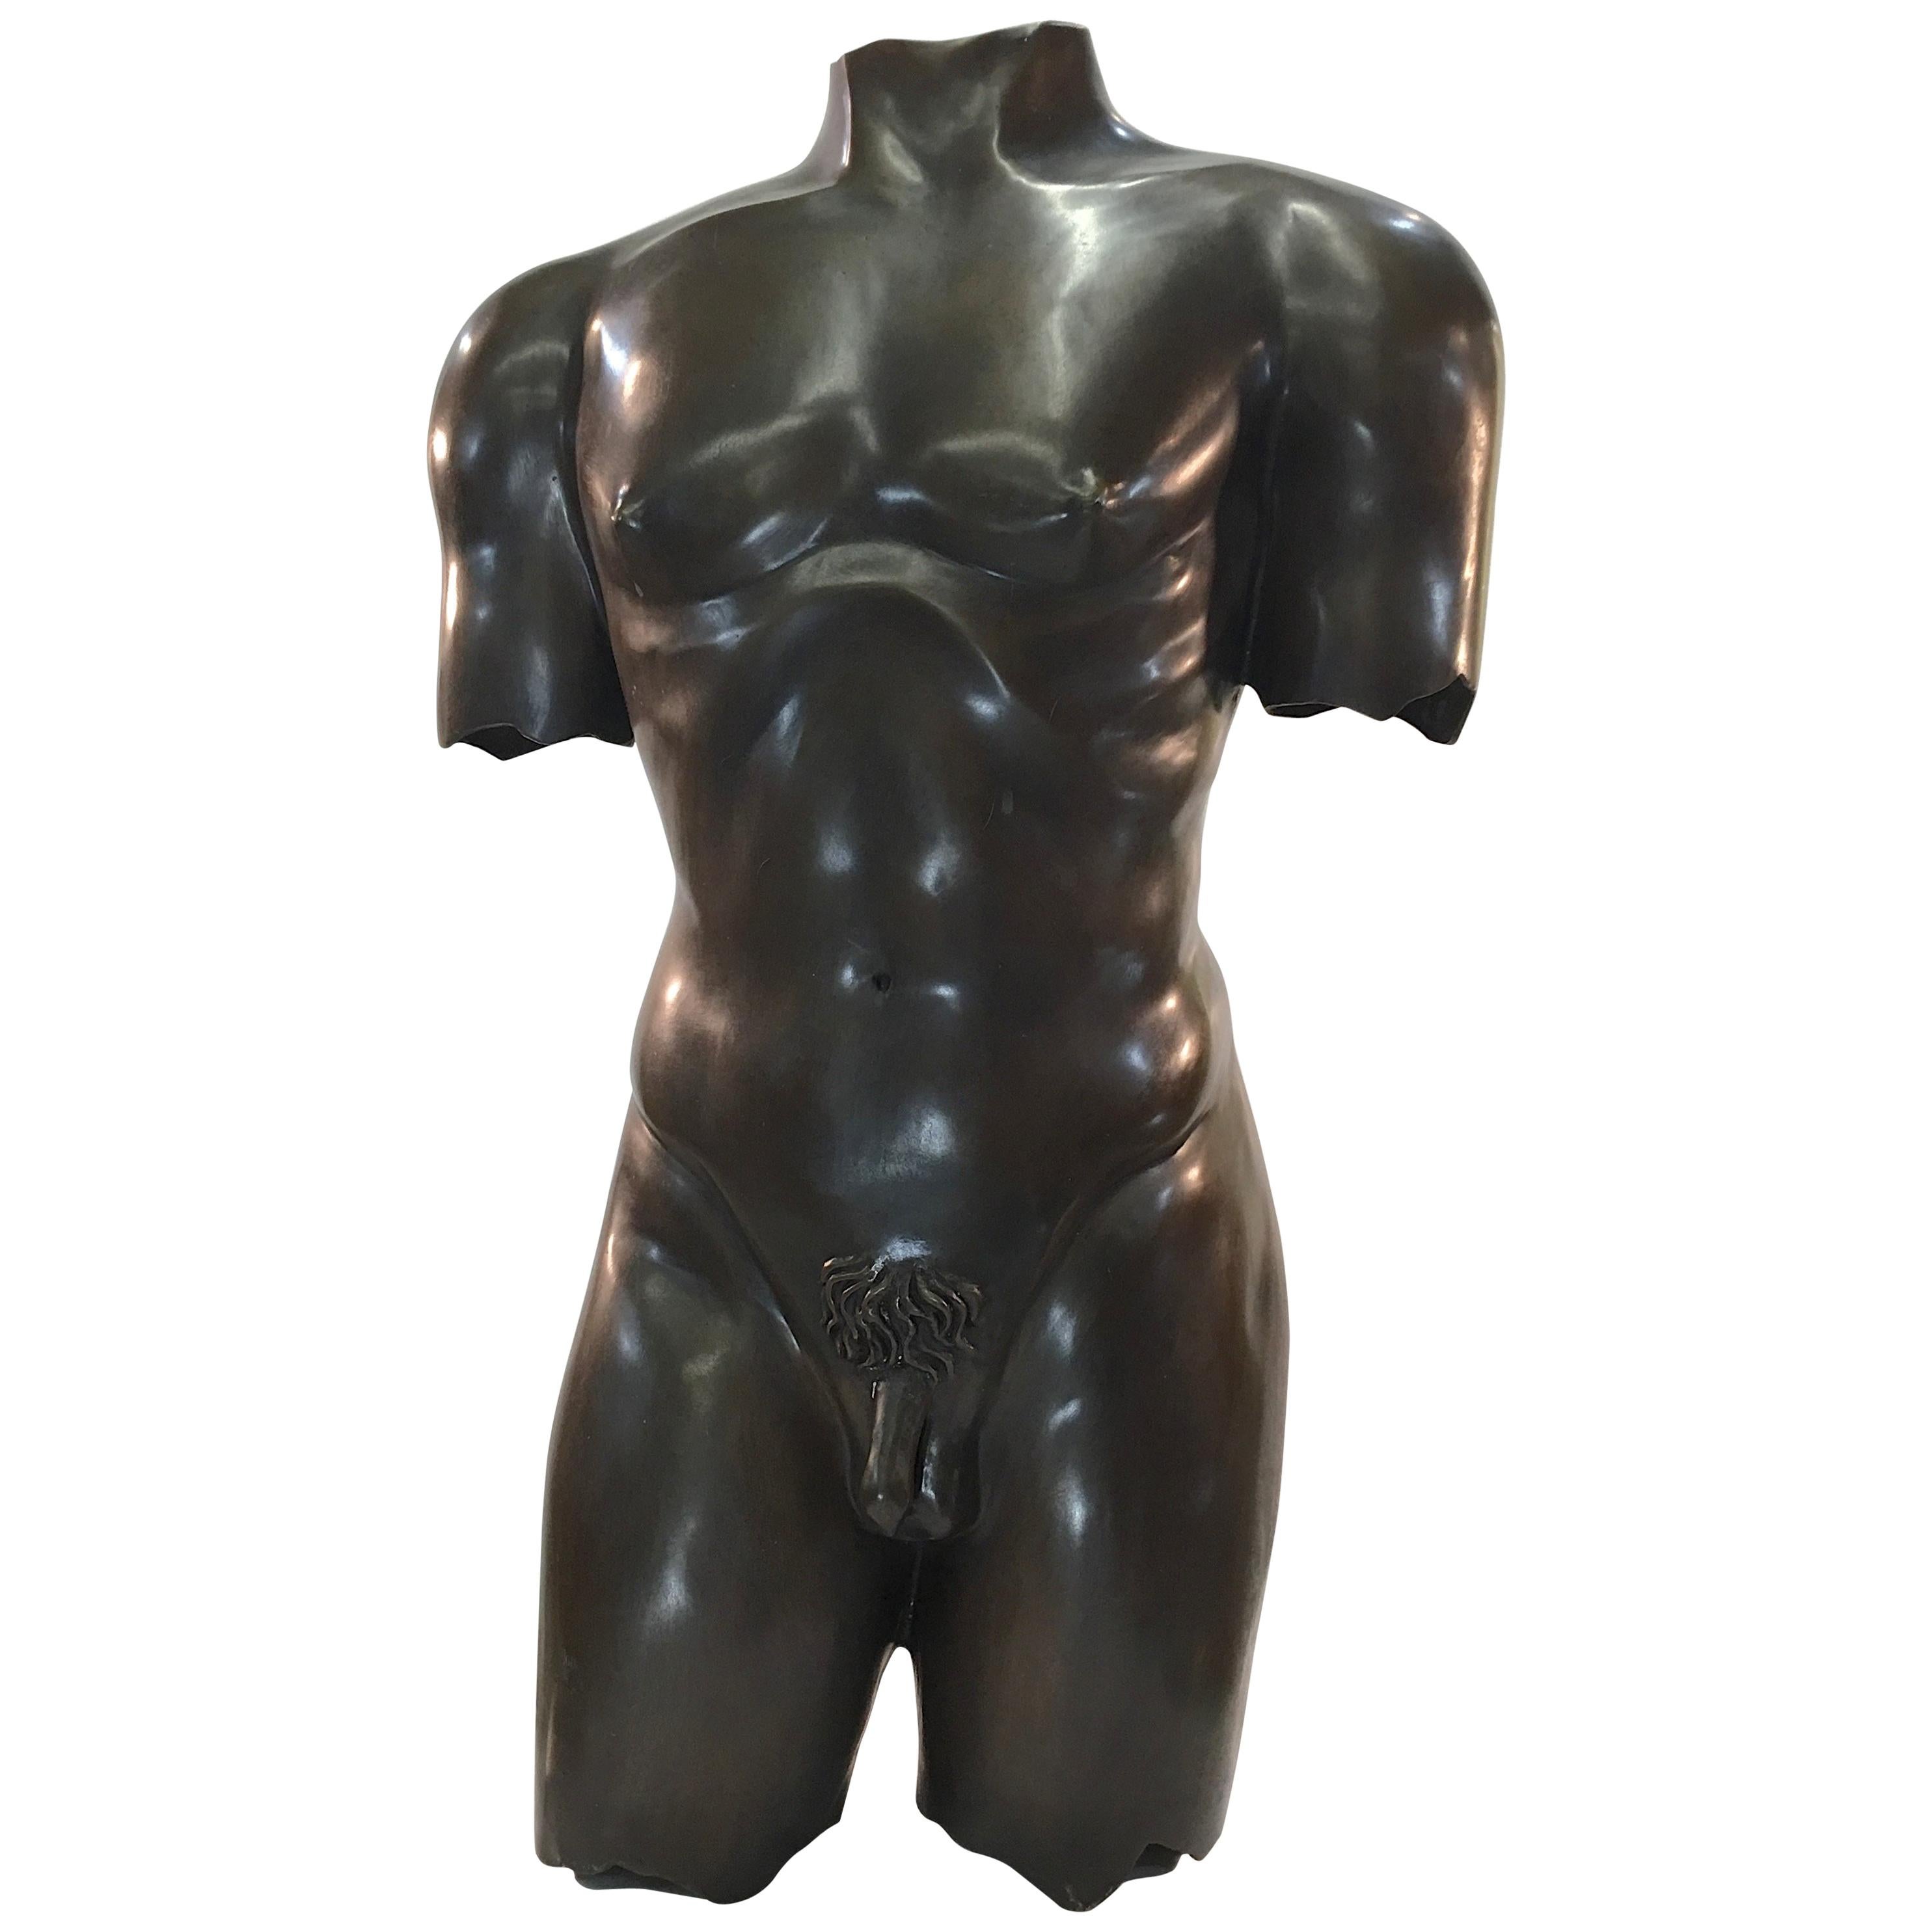 Life-Size Patinated Bronze Male Nude Torso Sculpture